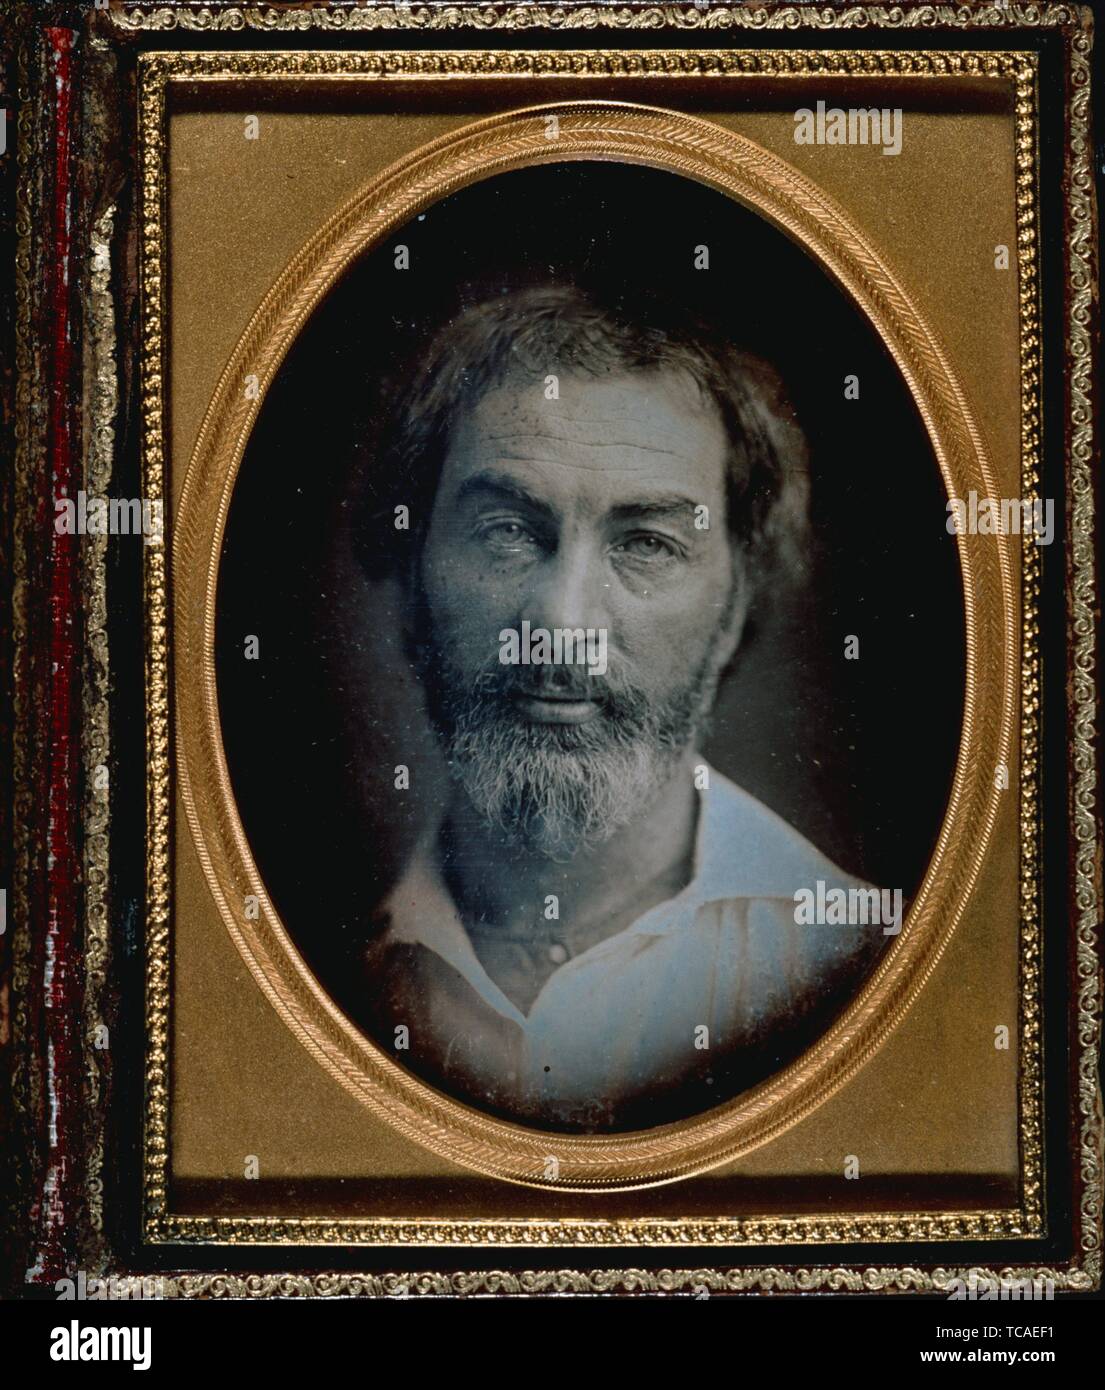 Daguerreotype portrait of Walt Whitman. Lion, Oscar (Collector). Oscar Lion Collection Portraits of Walt Whitman. Date Created: 1853 (Approximate). Stock Photo